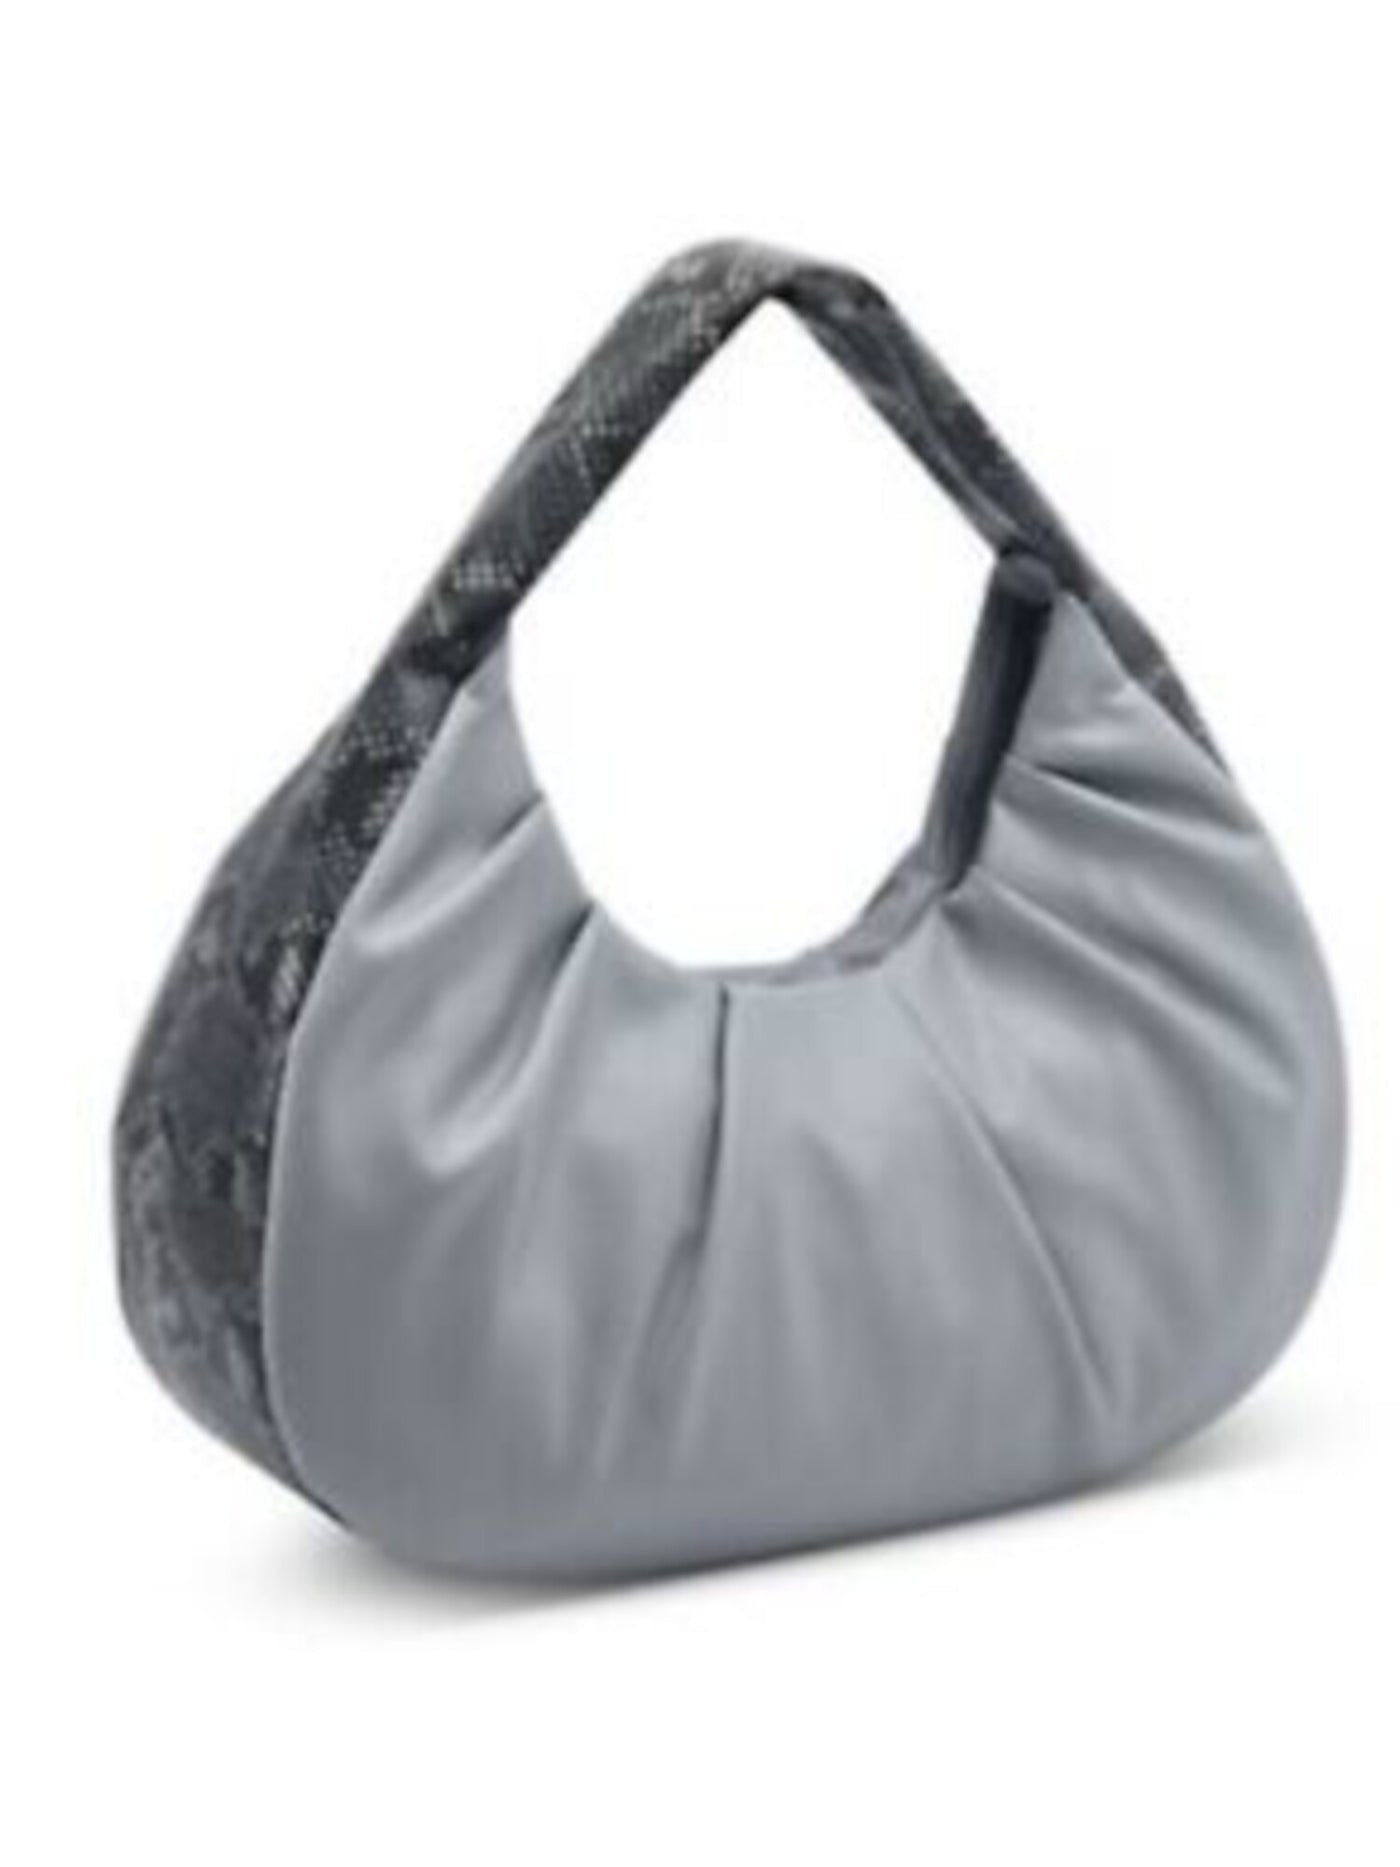 INC Women's Gray Kj Ruched Snake Print Faux Leather Single Strap Hobo Handbag Purse